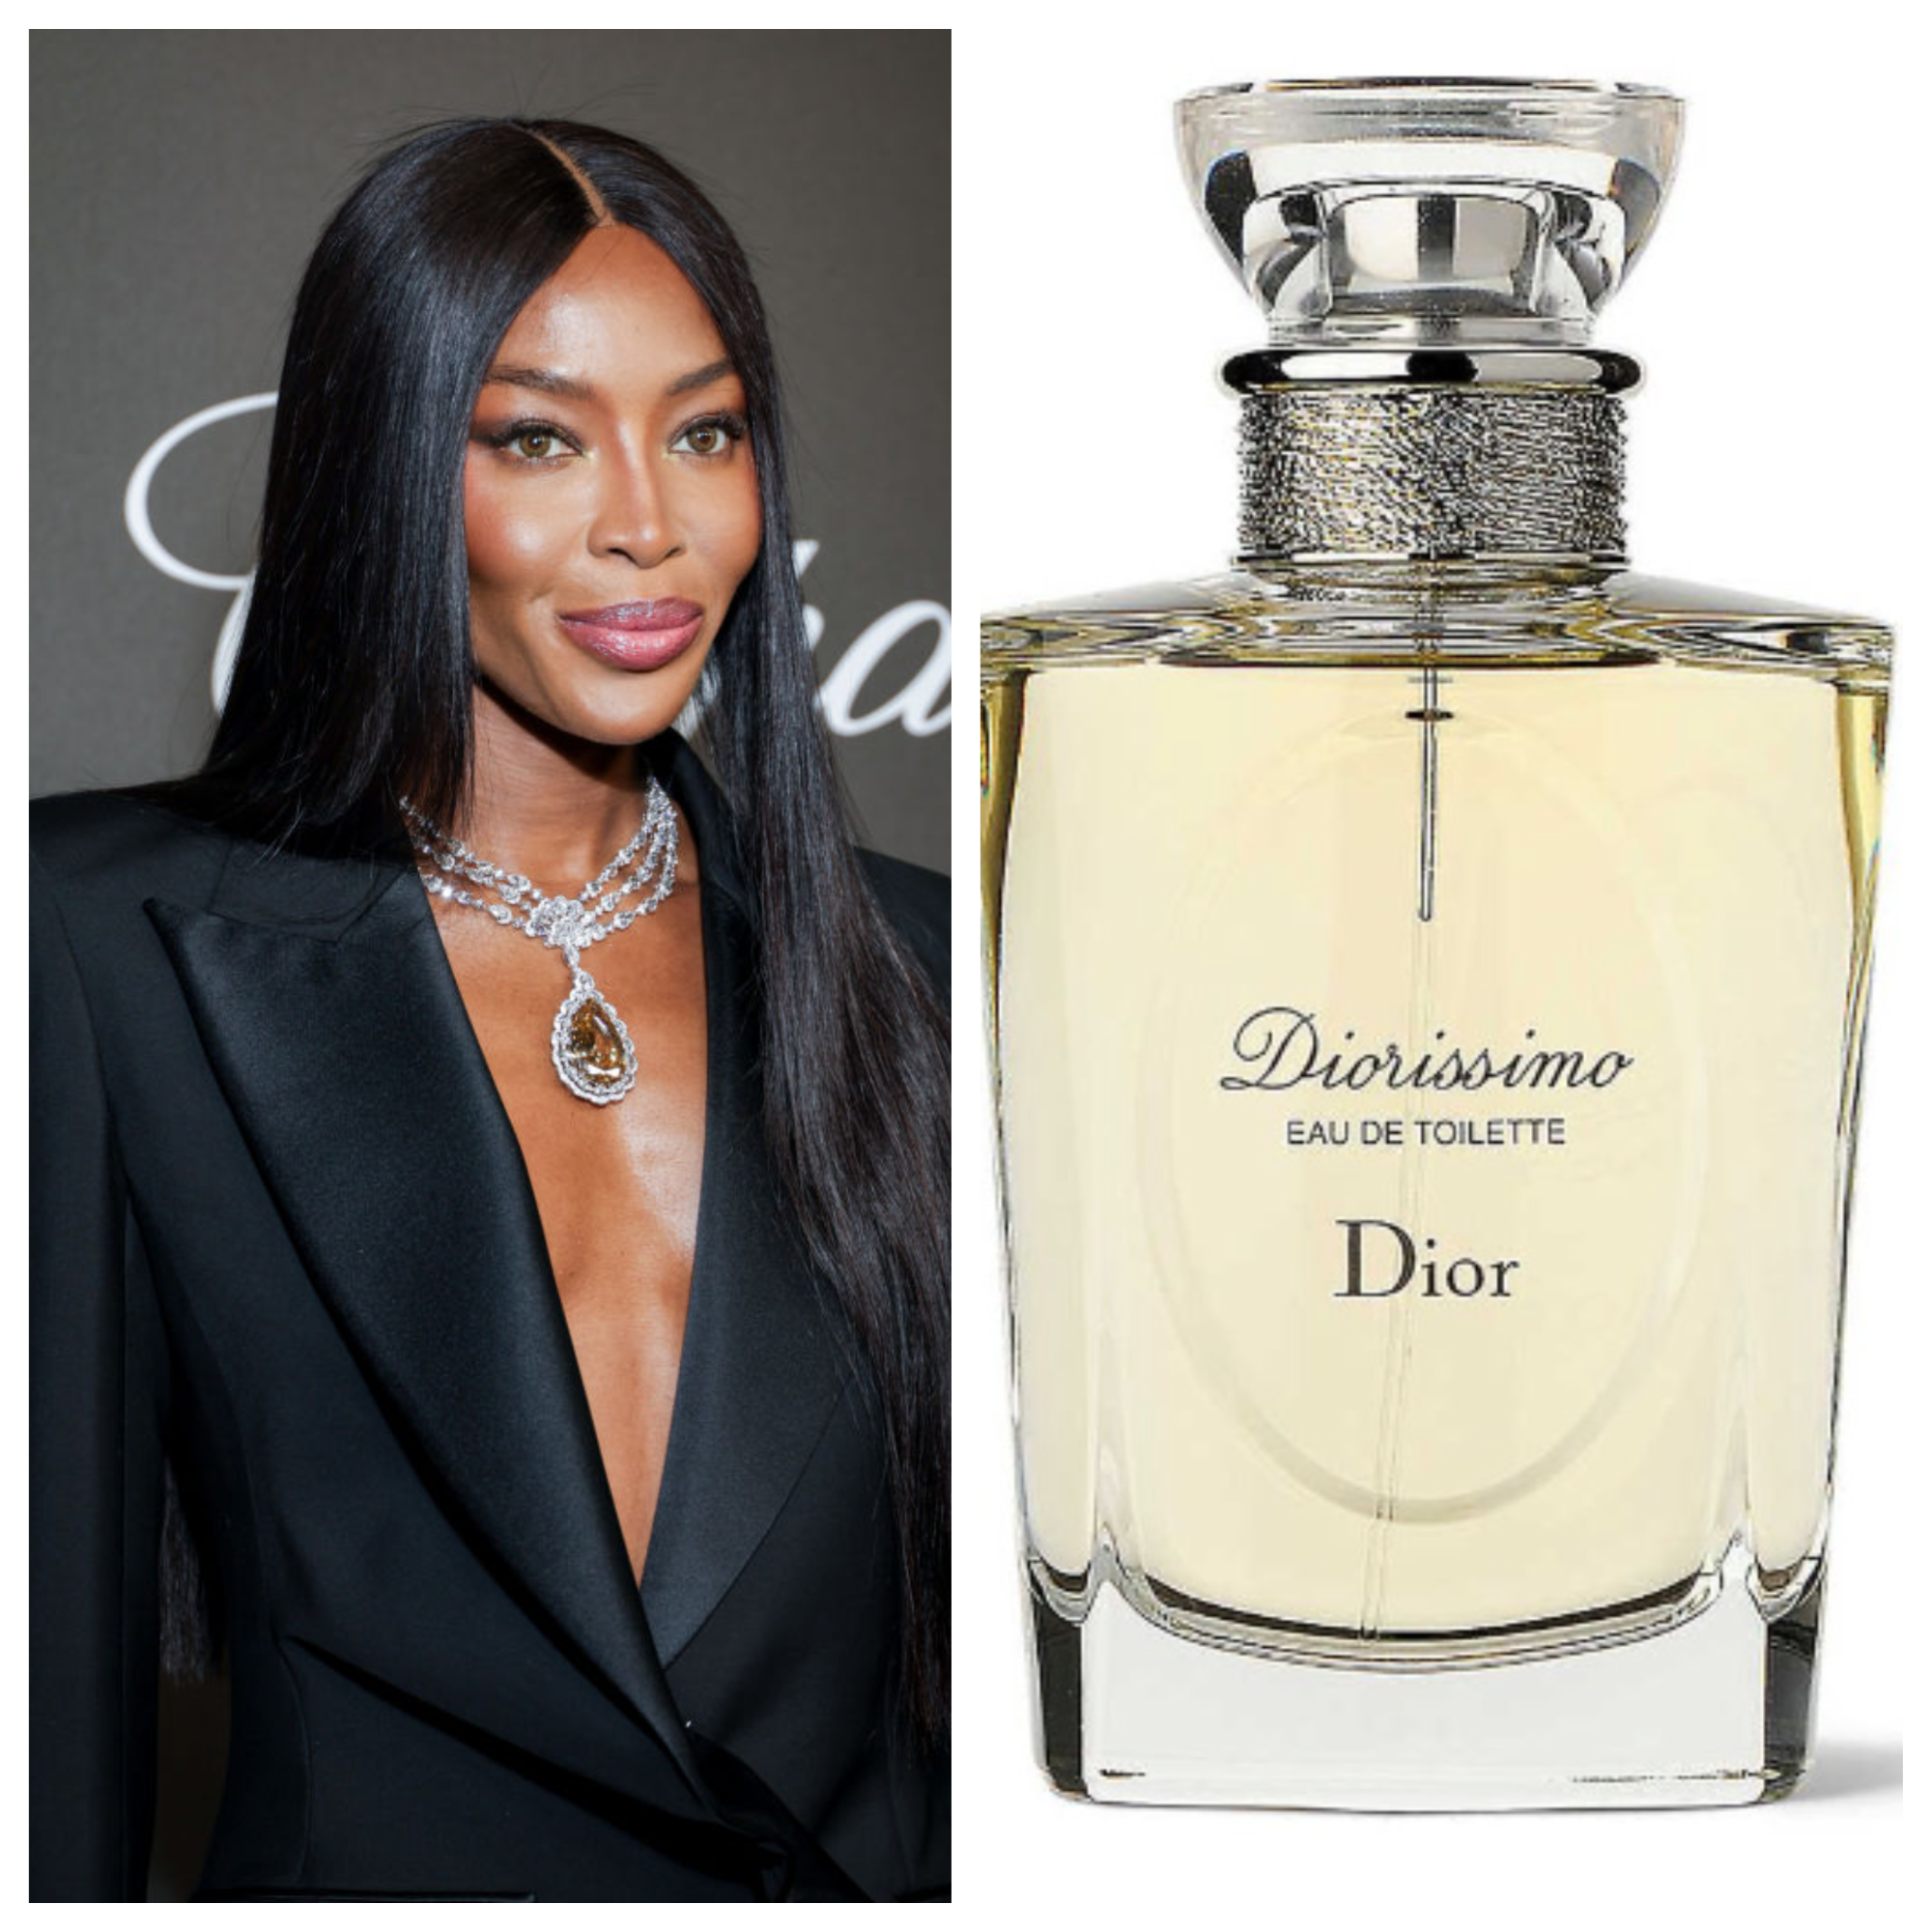 Celebrity perfume samples